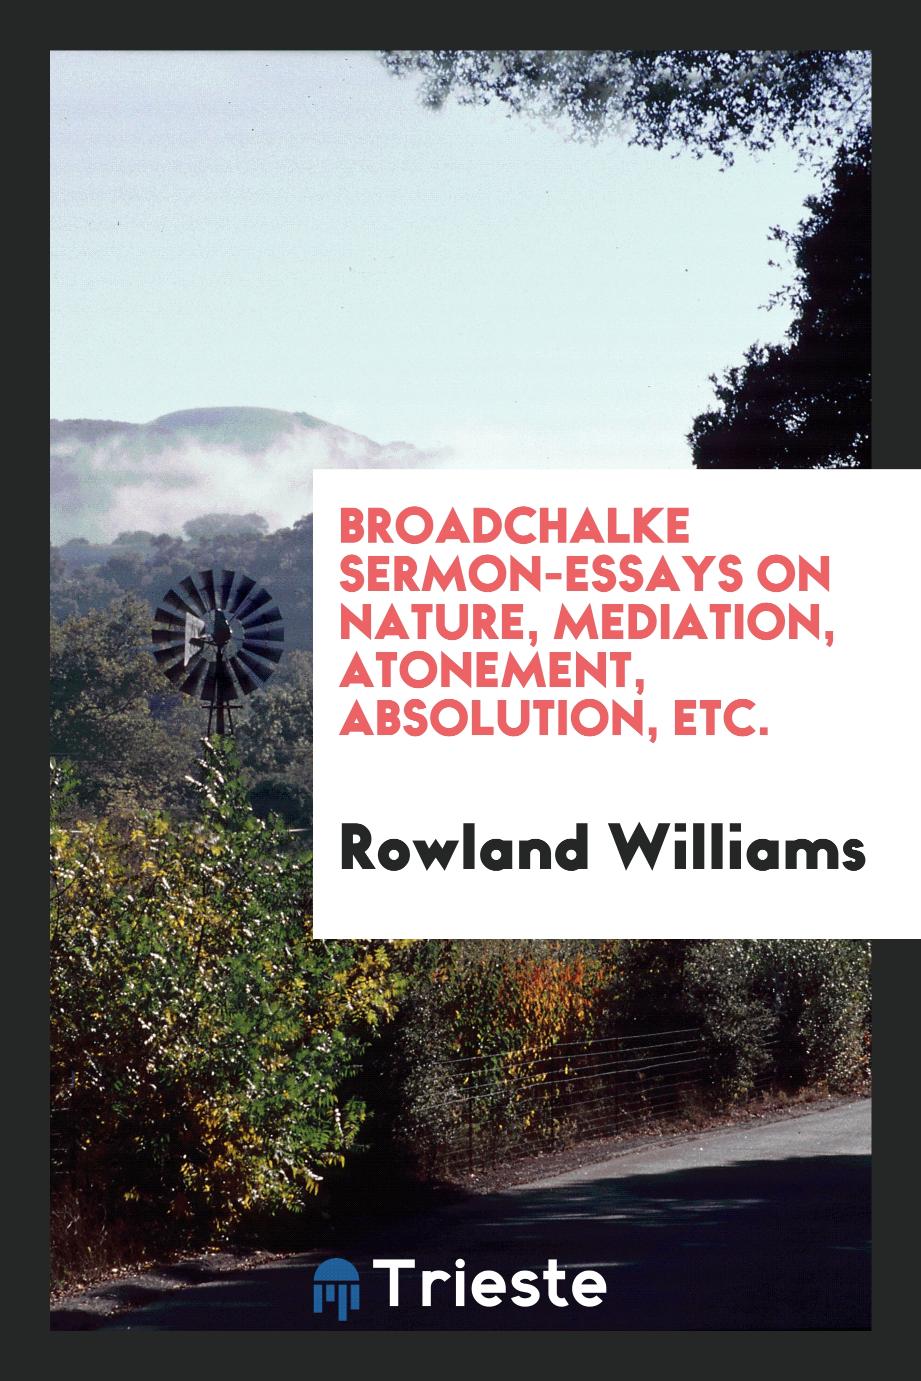 Rowland Williams - Broadchalke sermon-essays on nature, mediation, atonement, absolution, etc.